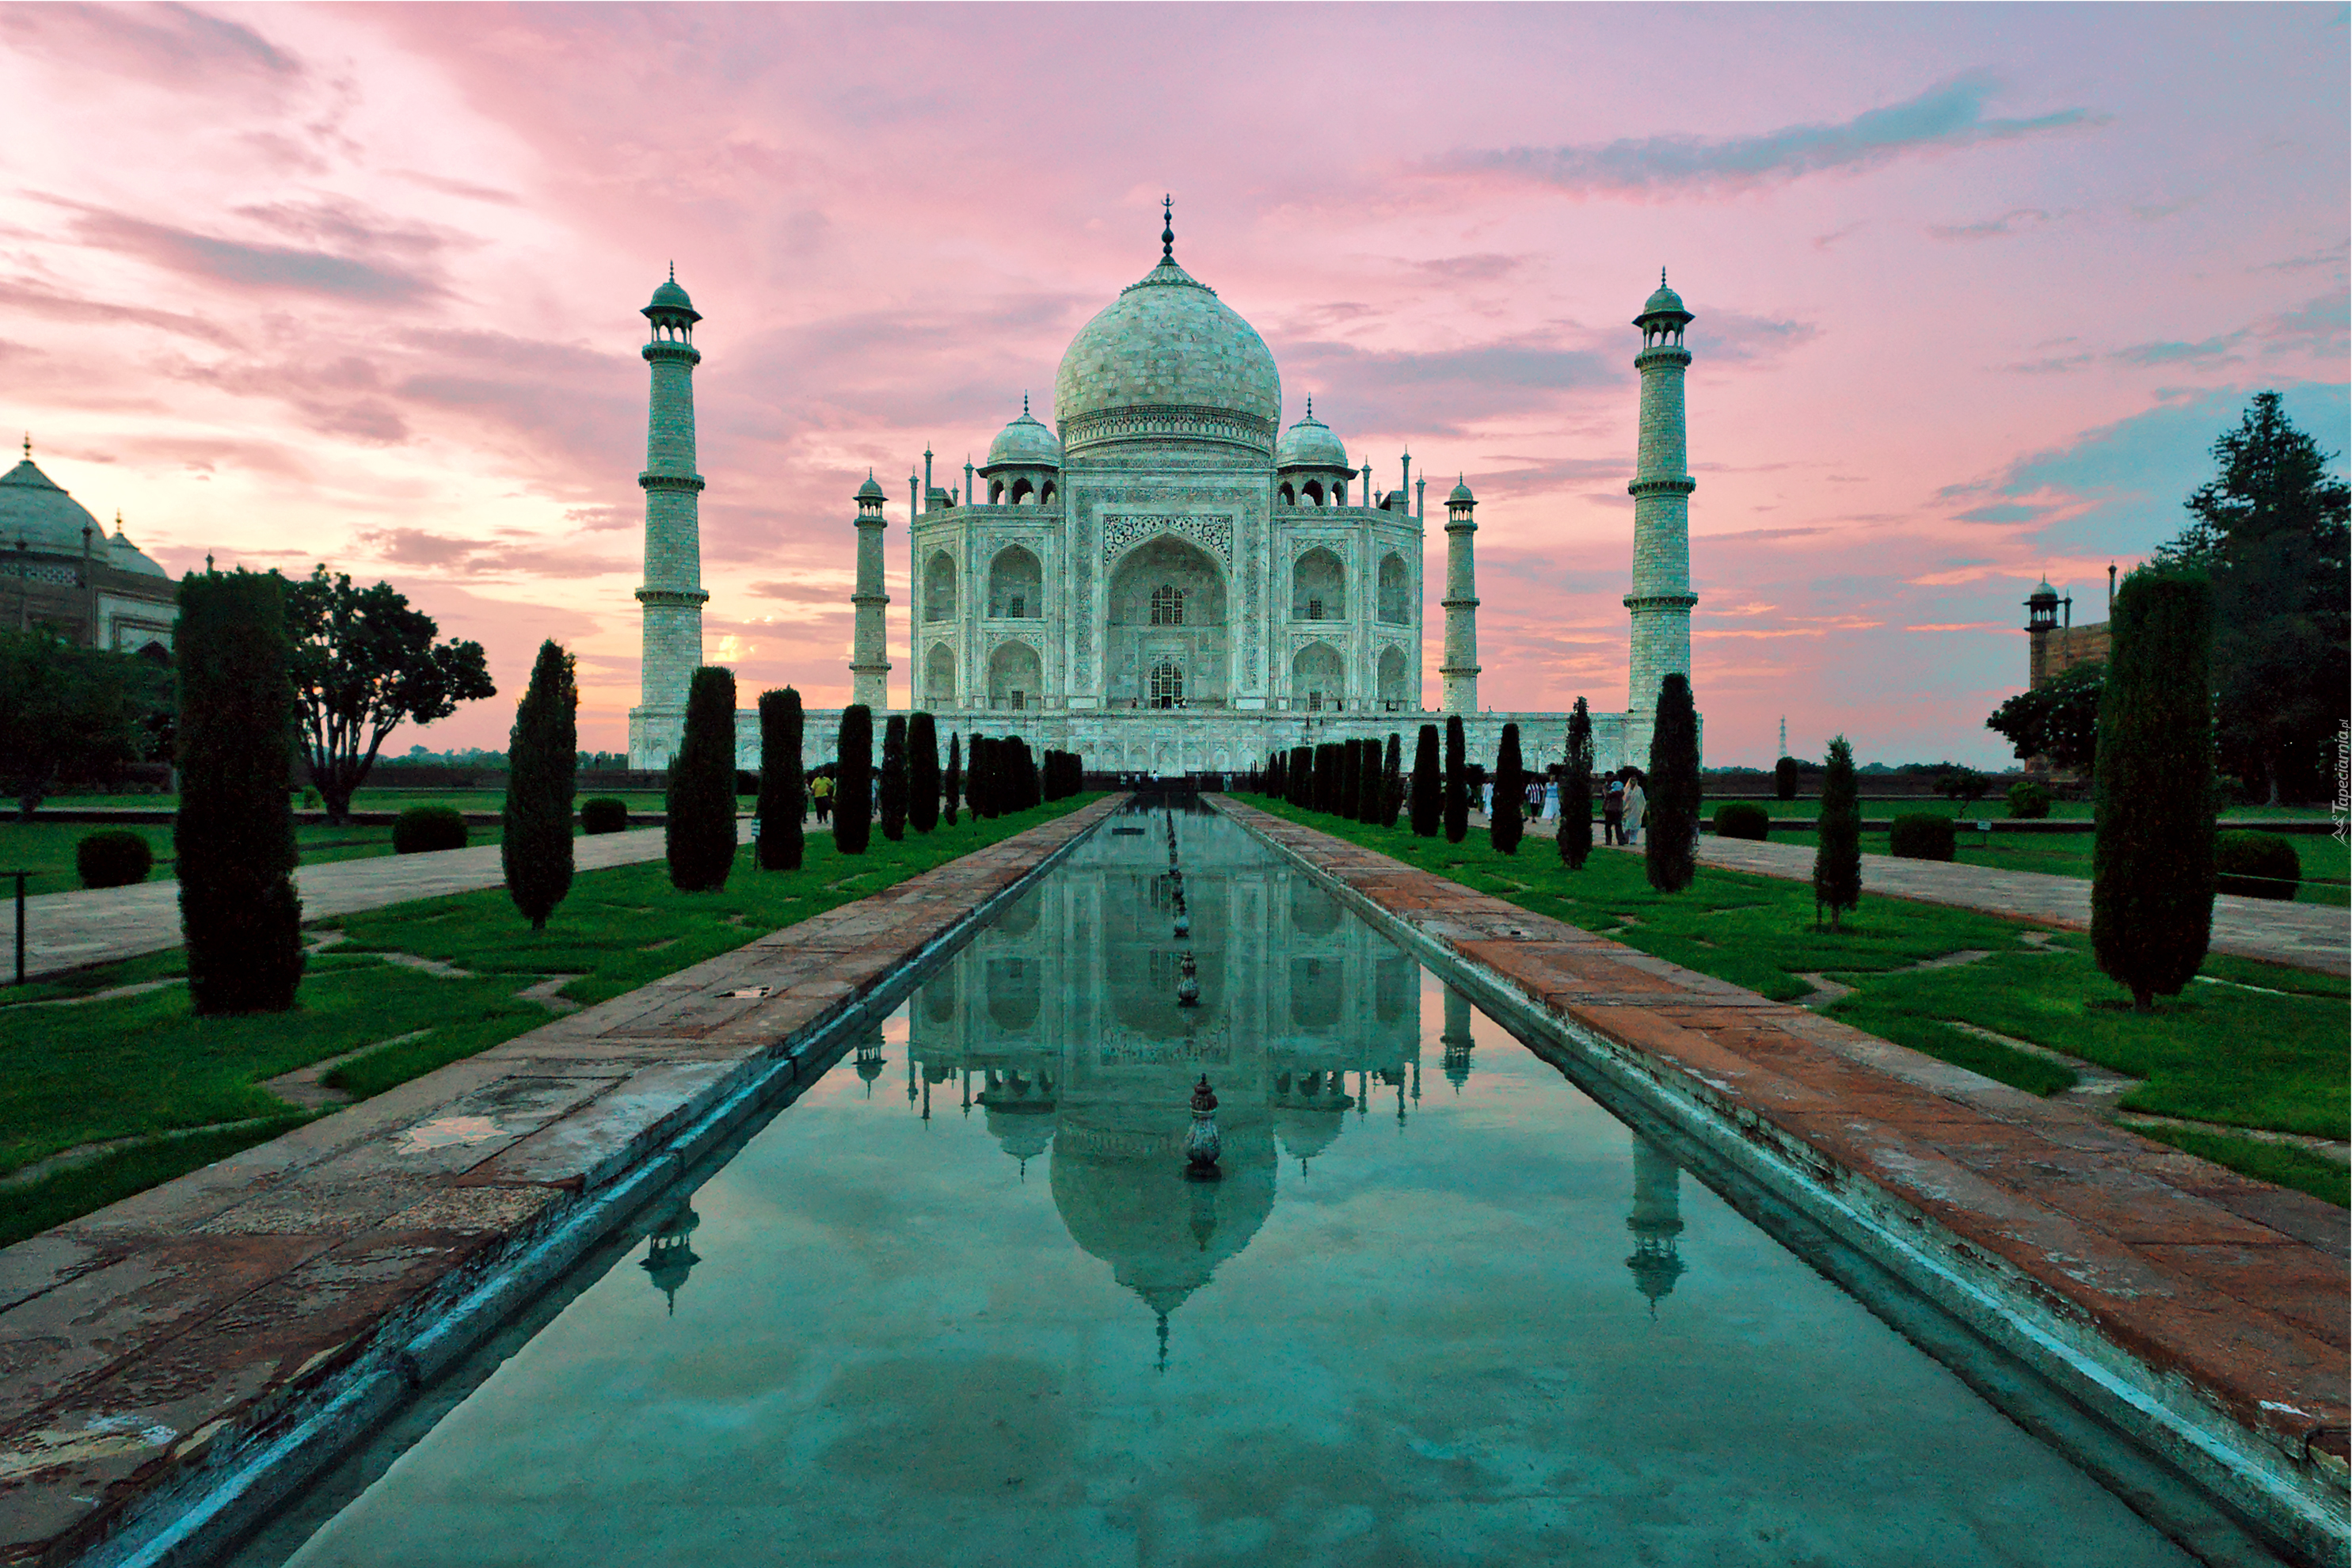 Indie, Agra, Mauzoleum, Tadź Mahal, Sadzawka lustrzana